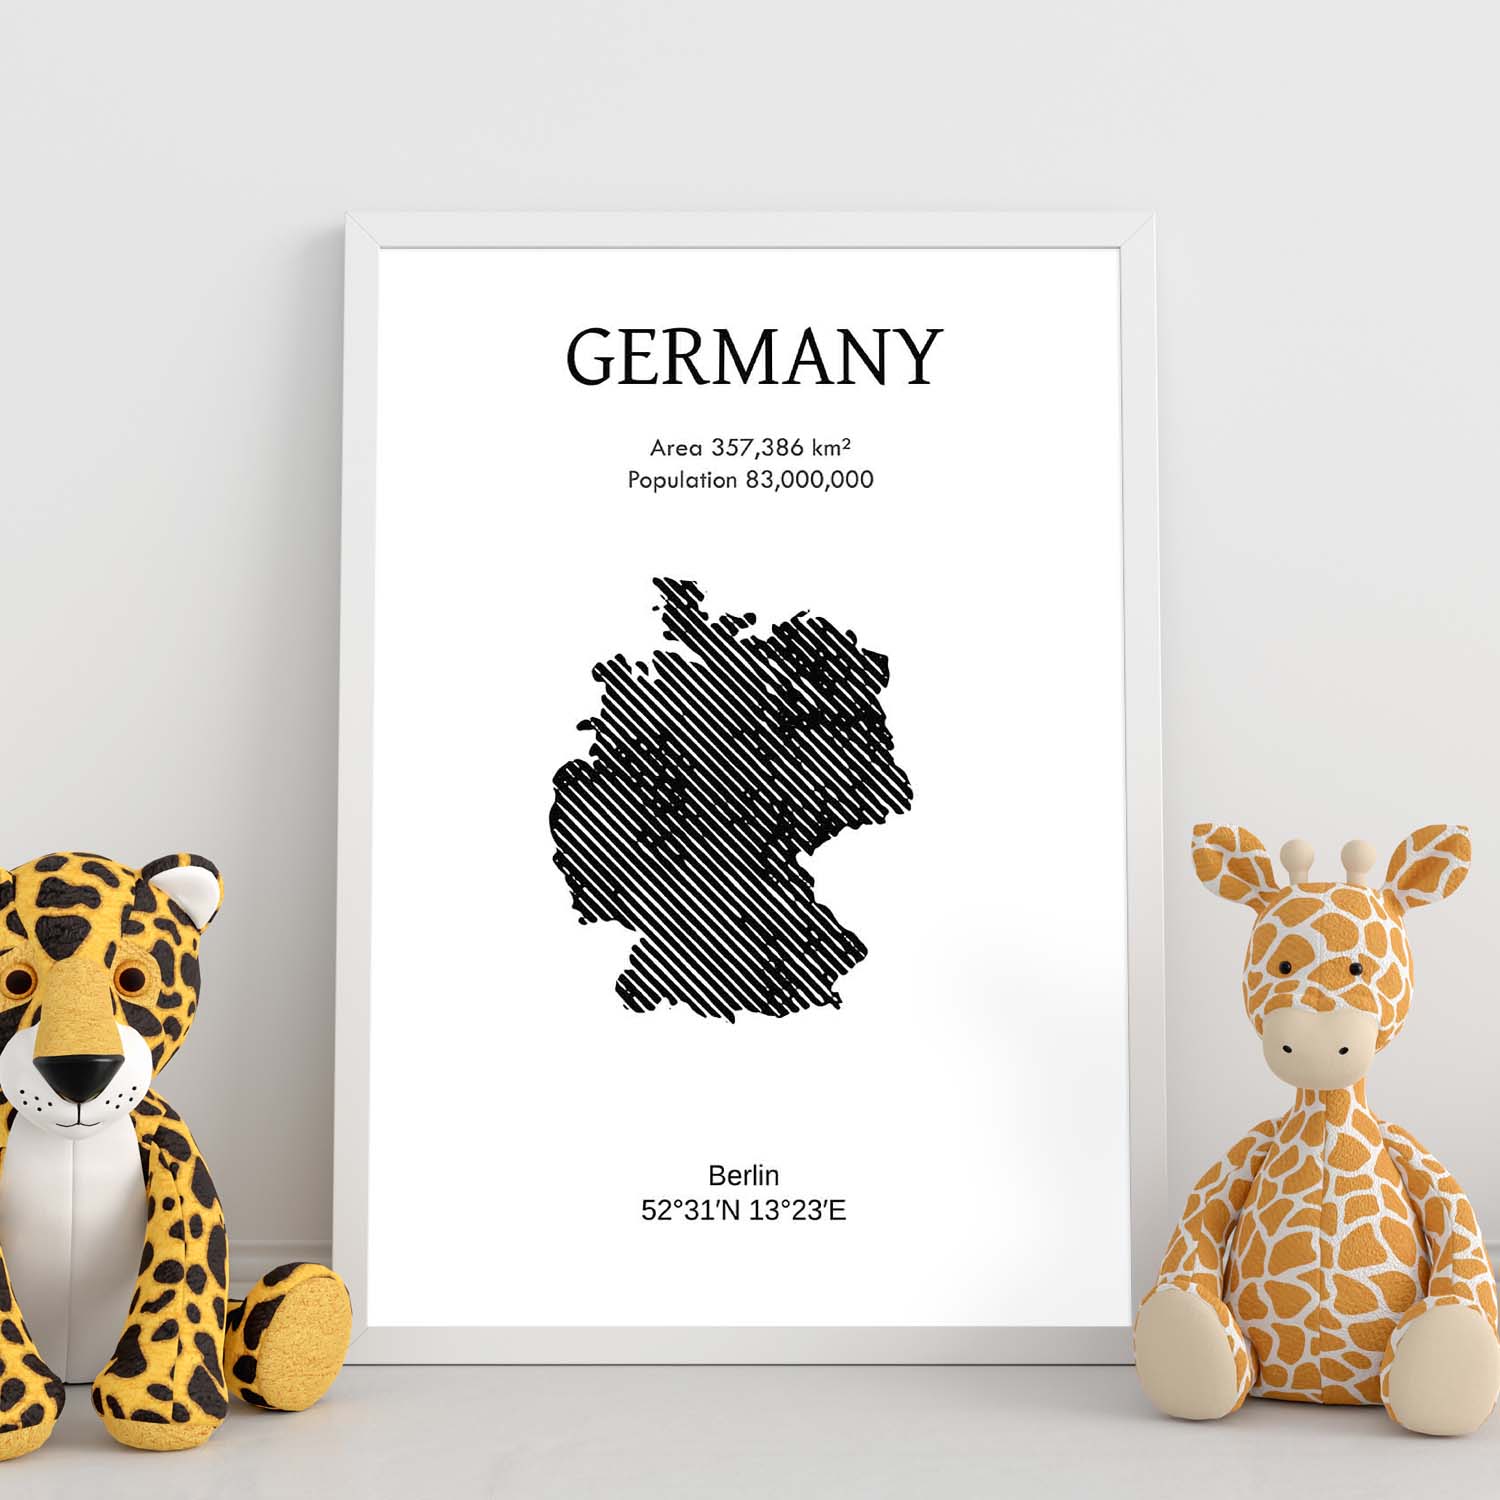 Poster de Alemania. Láminas de paises y continentes del mundo.-Artwork-Nacnic-Nacnic Estudio SL